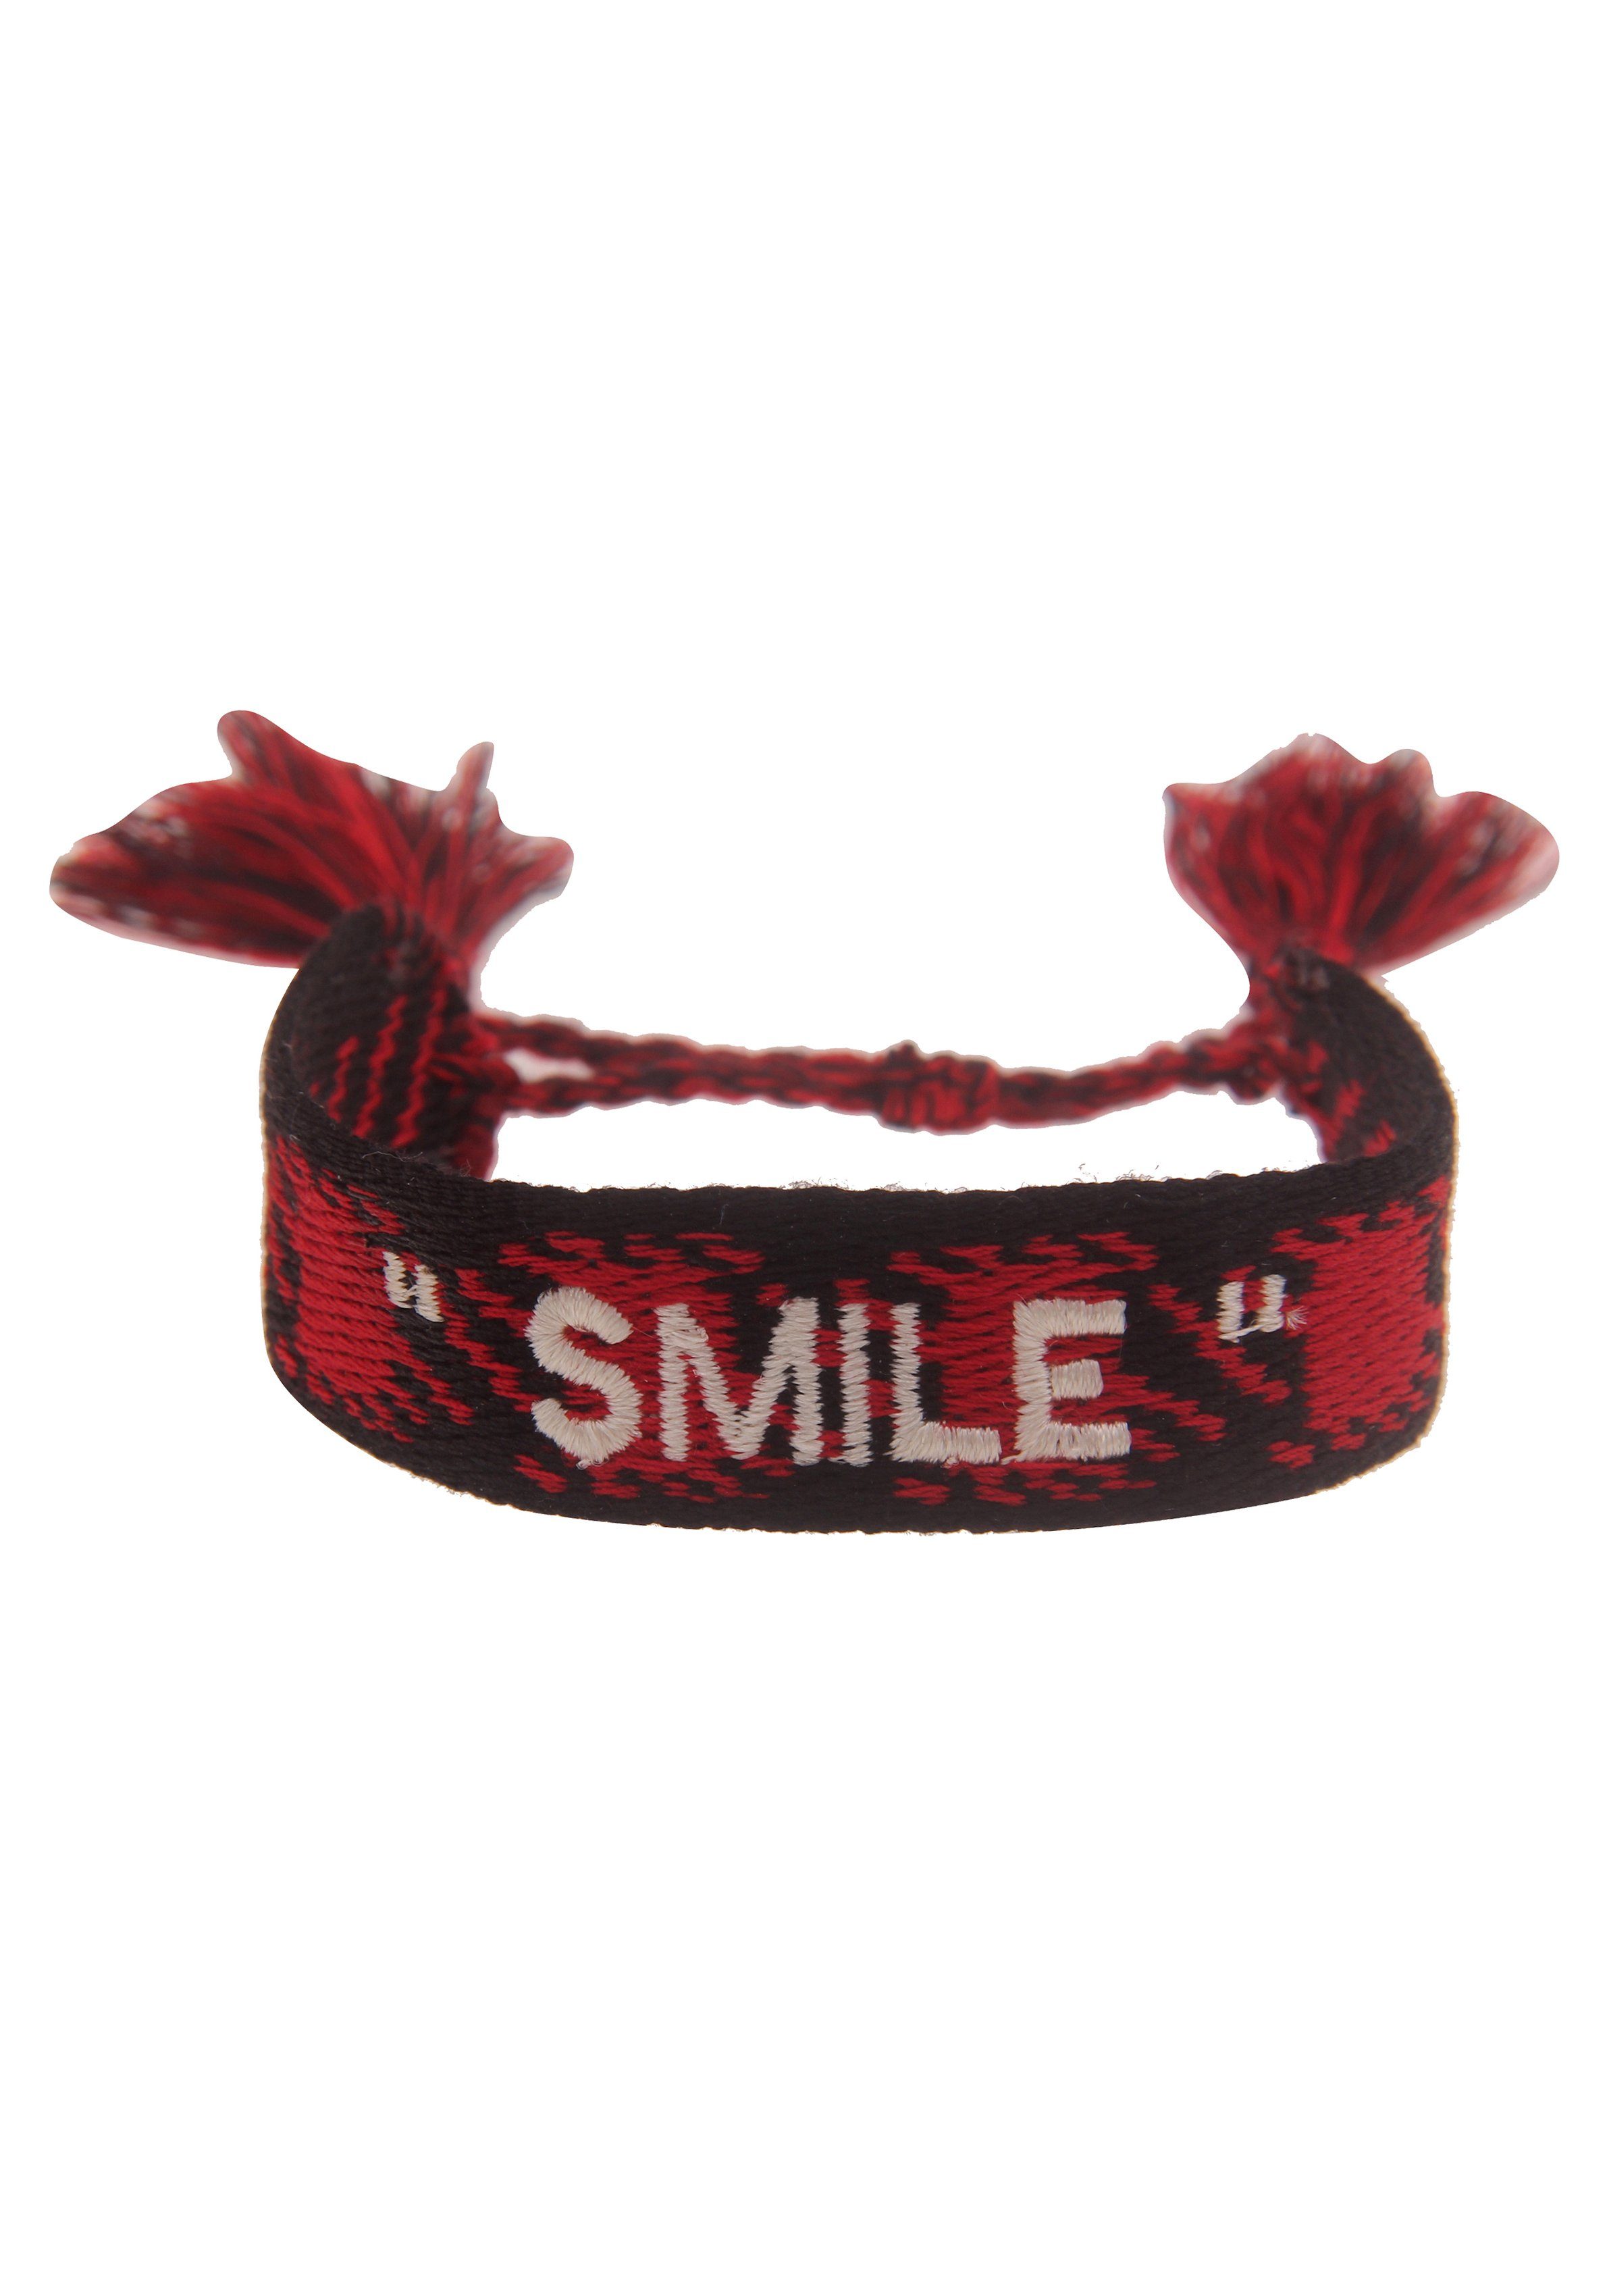 Festival Smile, 260120410 Armband, leslii Armband